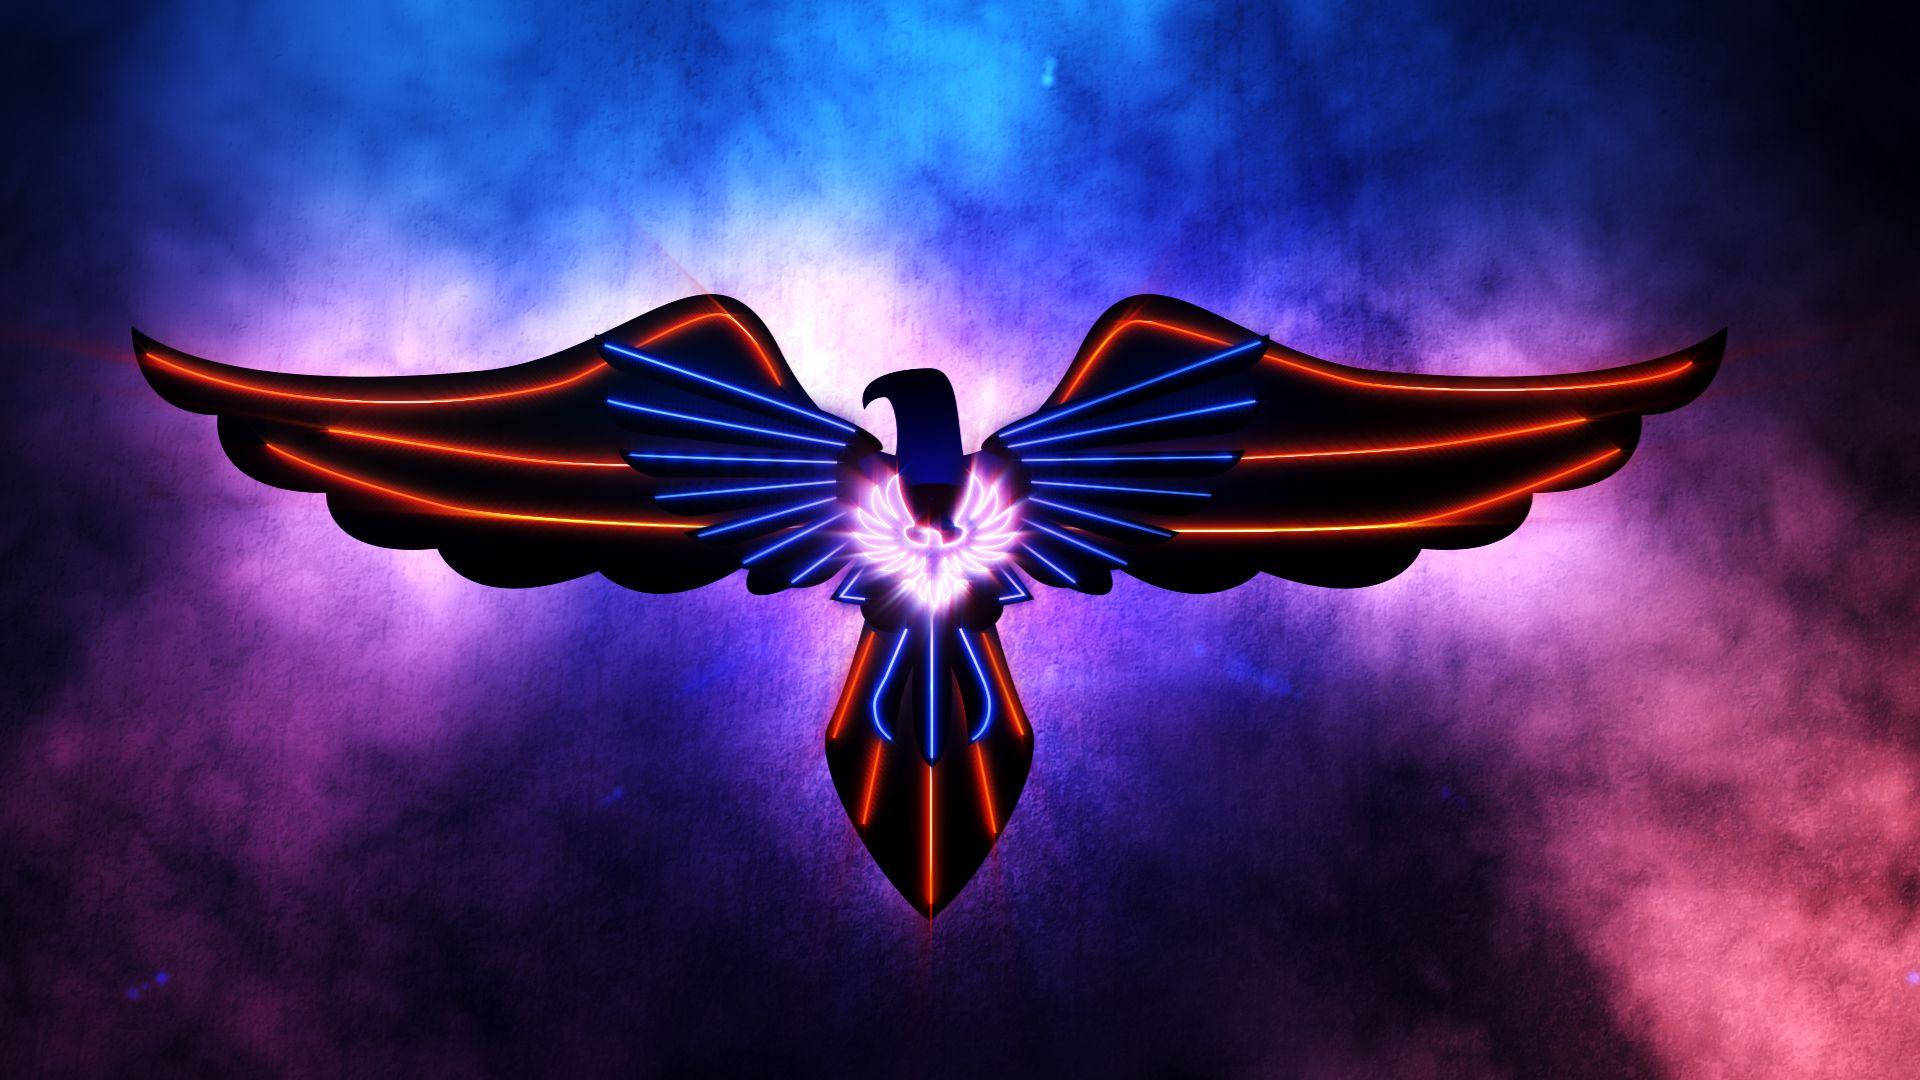 Neon Phoenix Symbol From American Gods Series